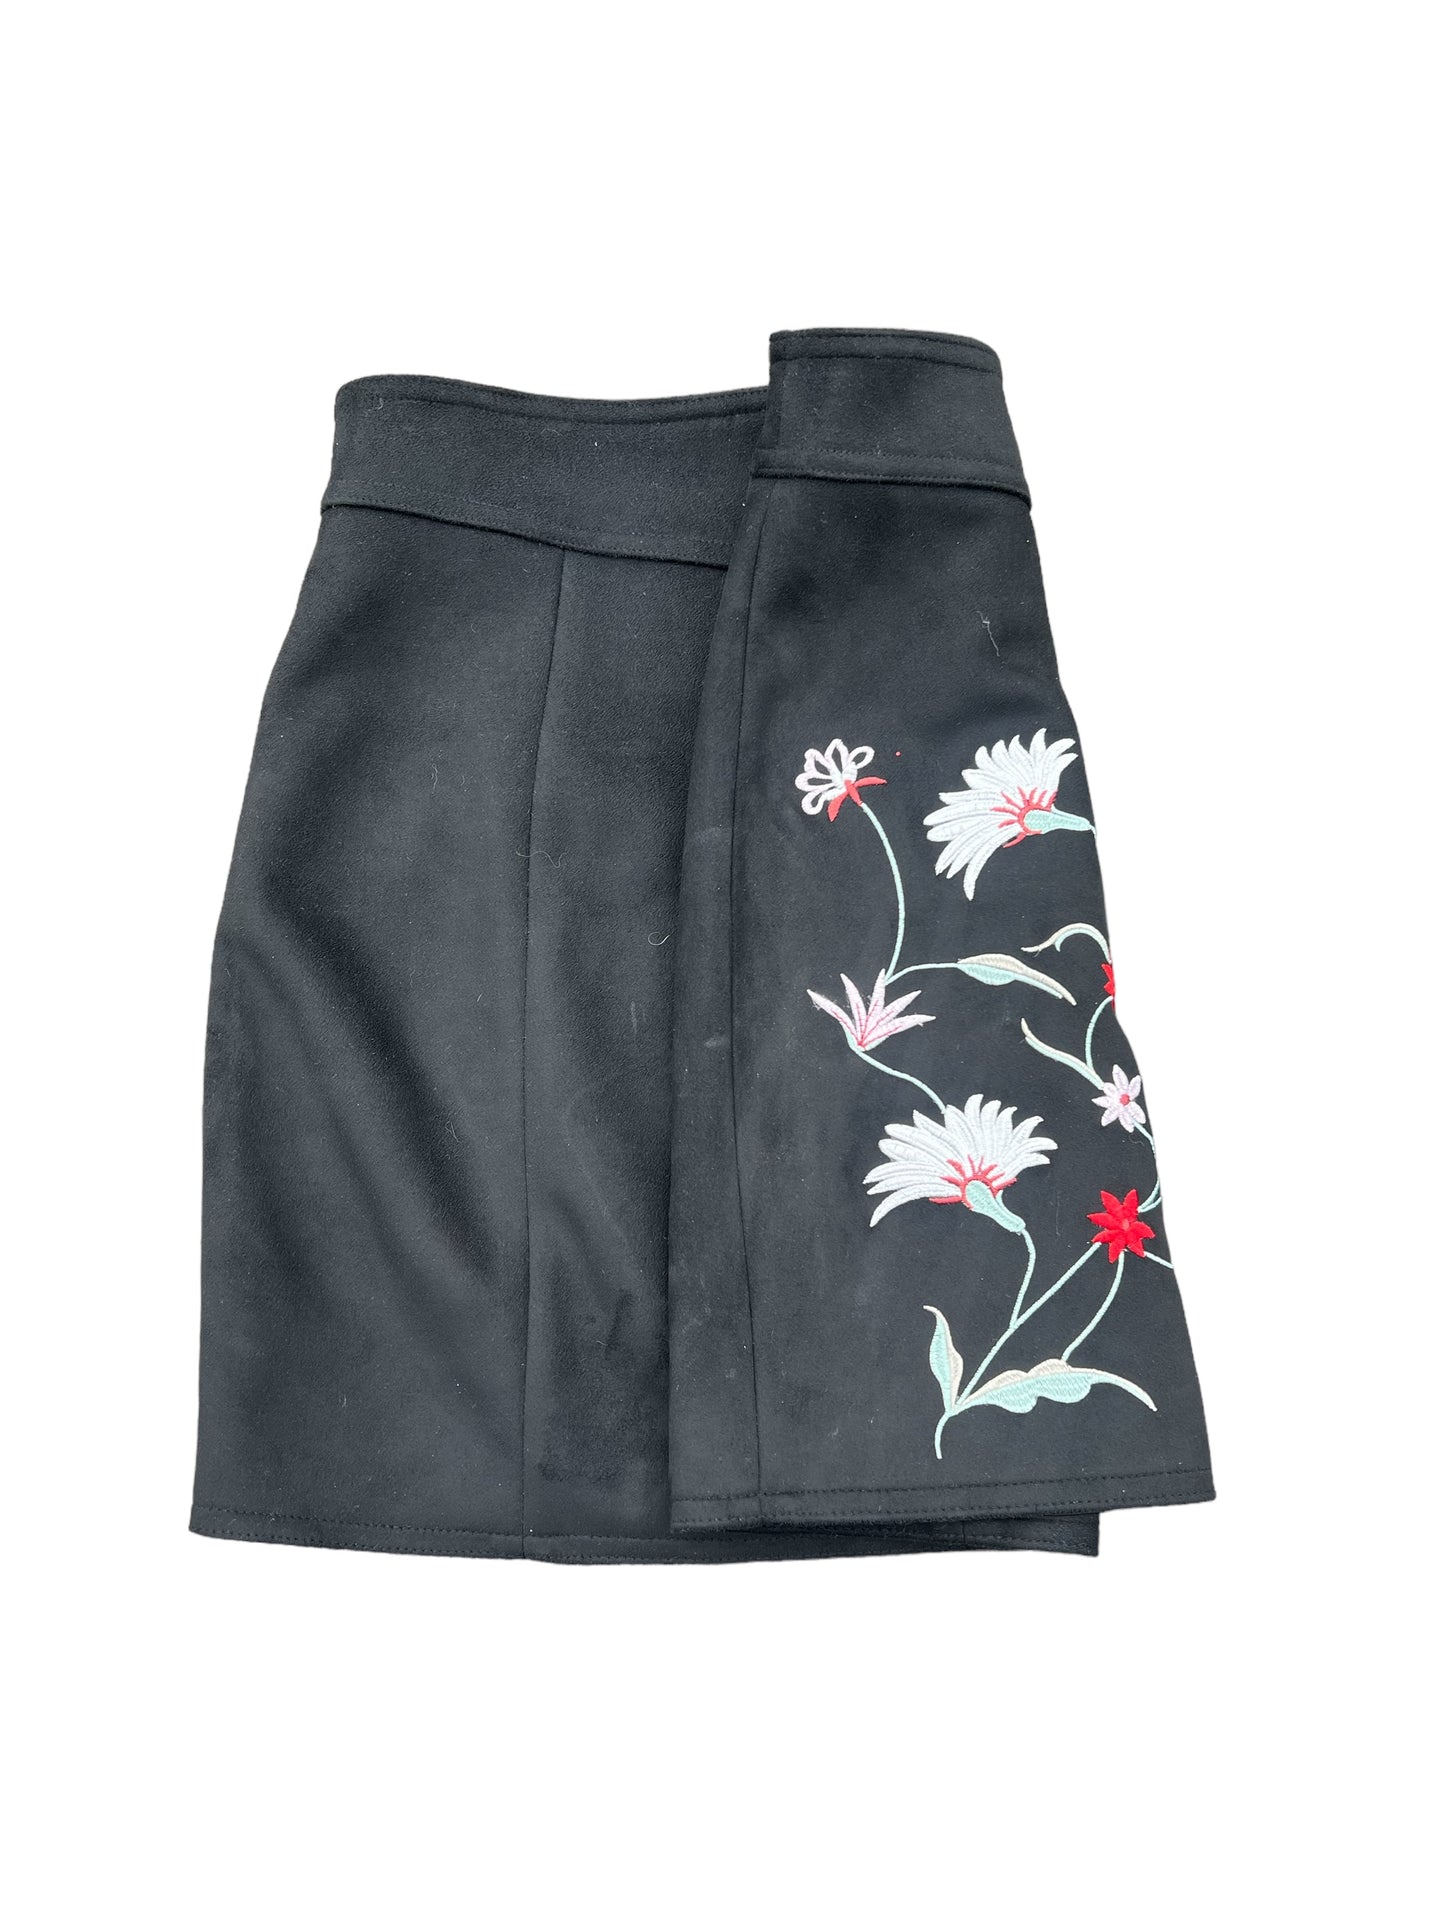 Dex Floral Embroidered Skirt